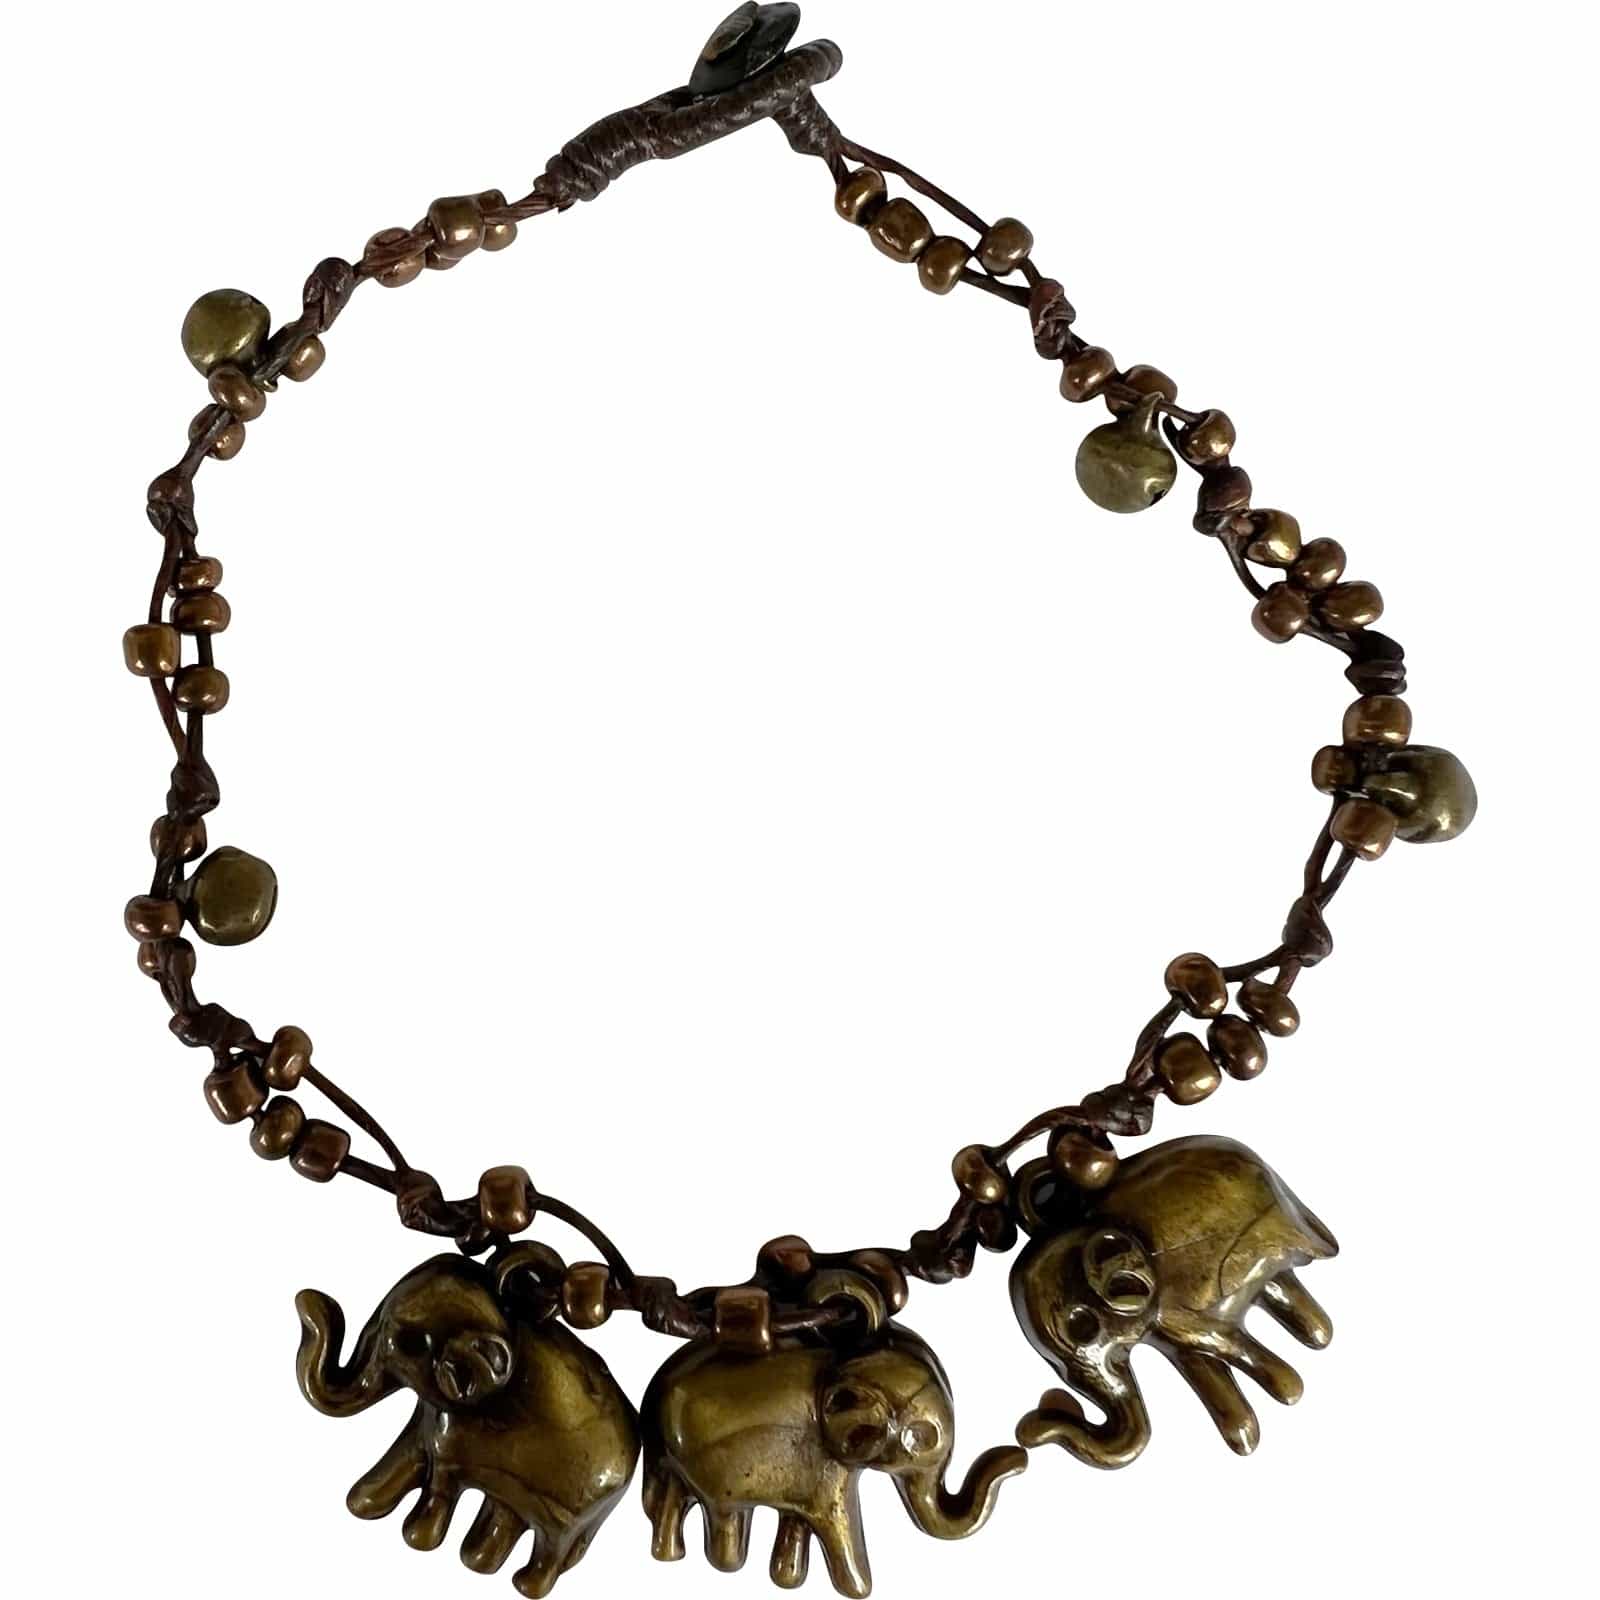 Elephant Anklet Ankle Bracelet Foot Chain Womens Ladies Girls Beach Jewellery